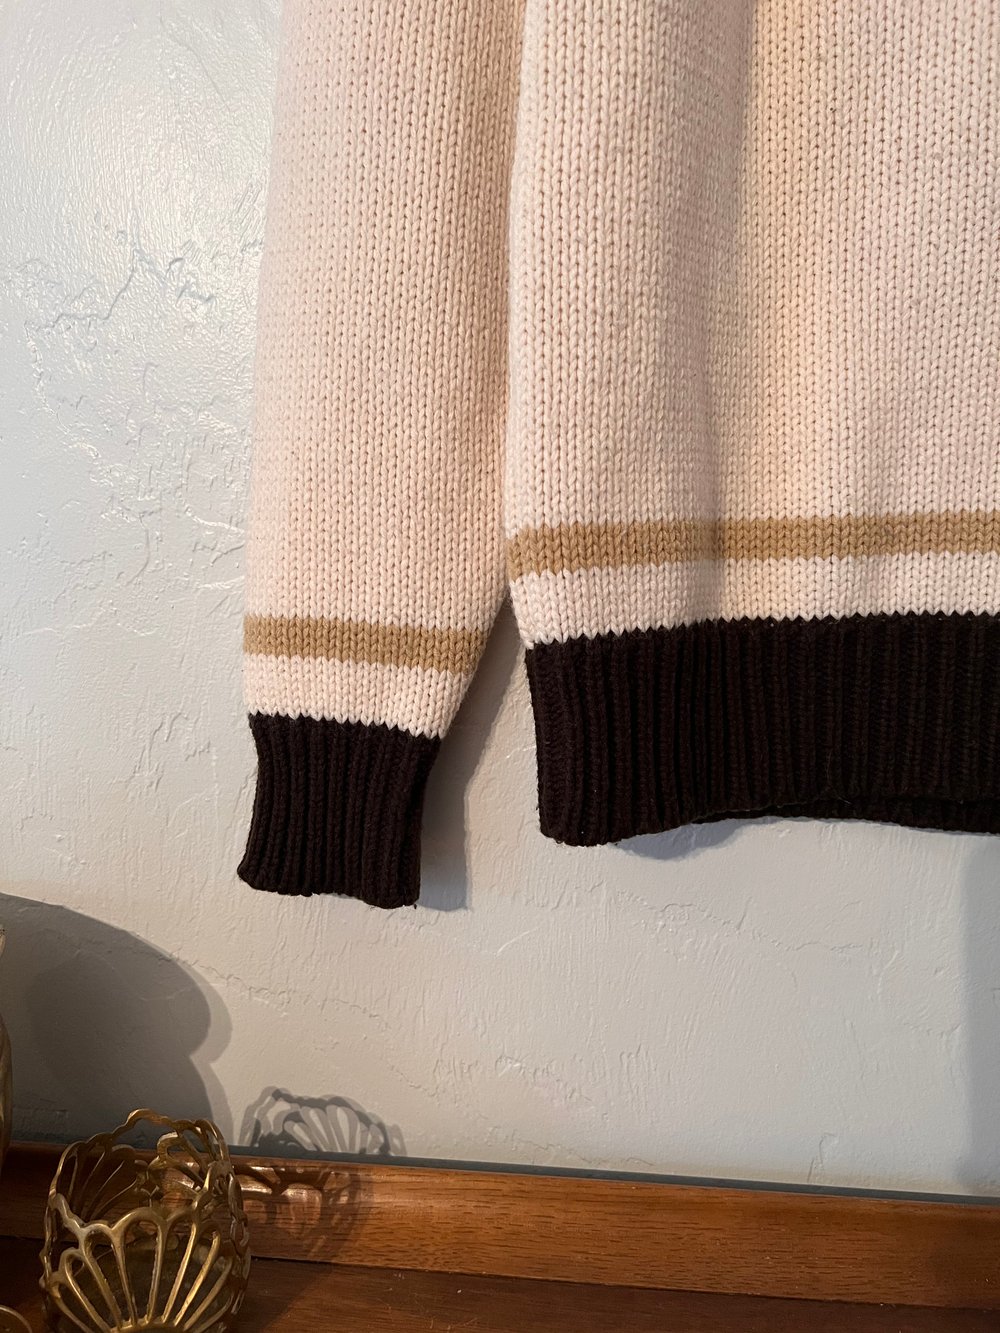 Vintage NAC Stylist Sweater (L)